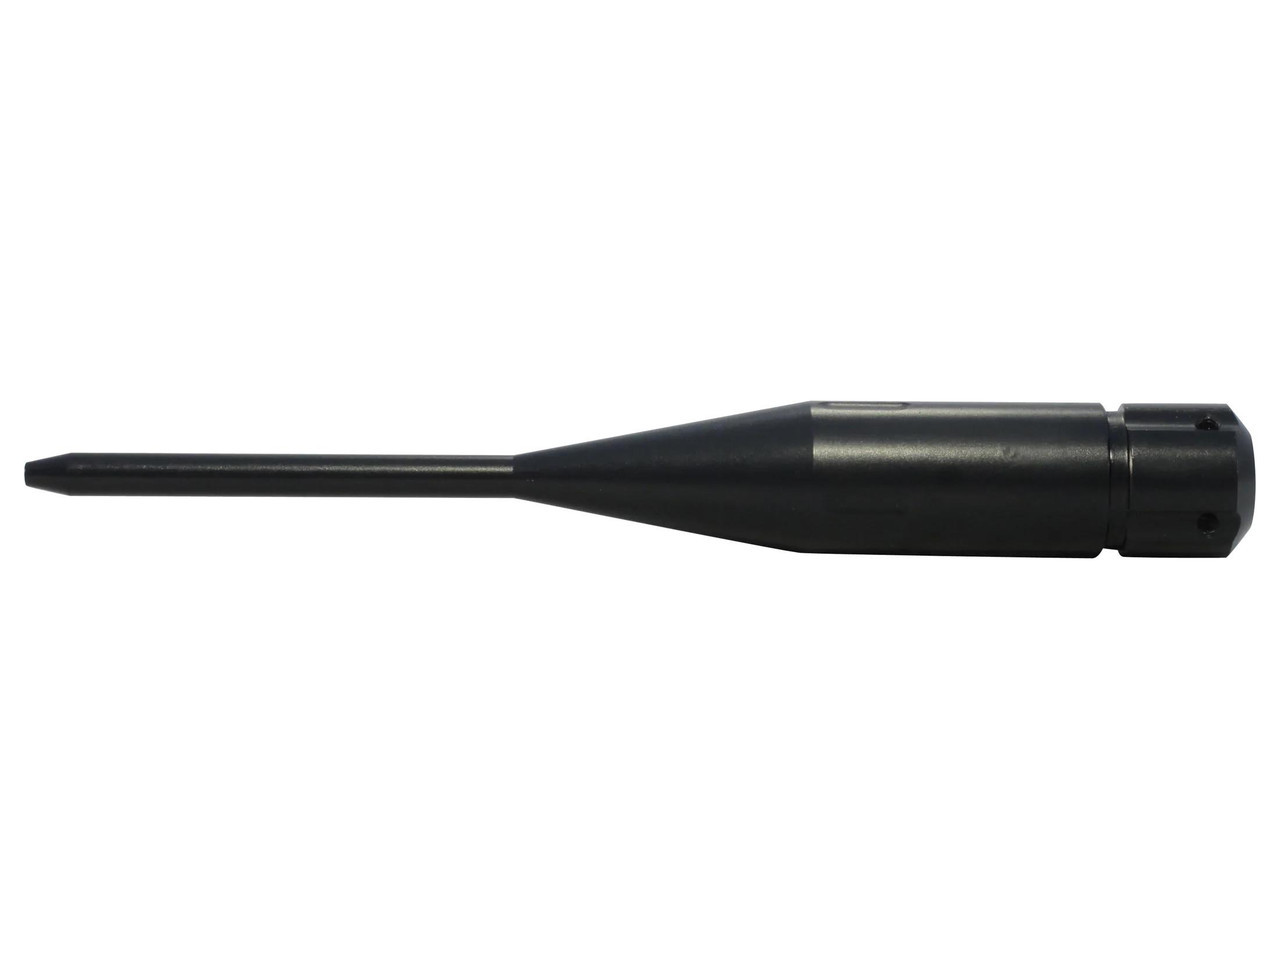 Bushnell Universal Laser Bore Sight 22 to 50 Caliber, 20, 12 Gauge